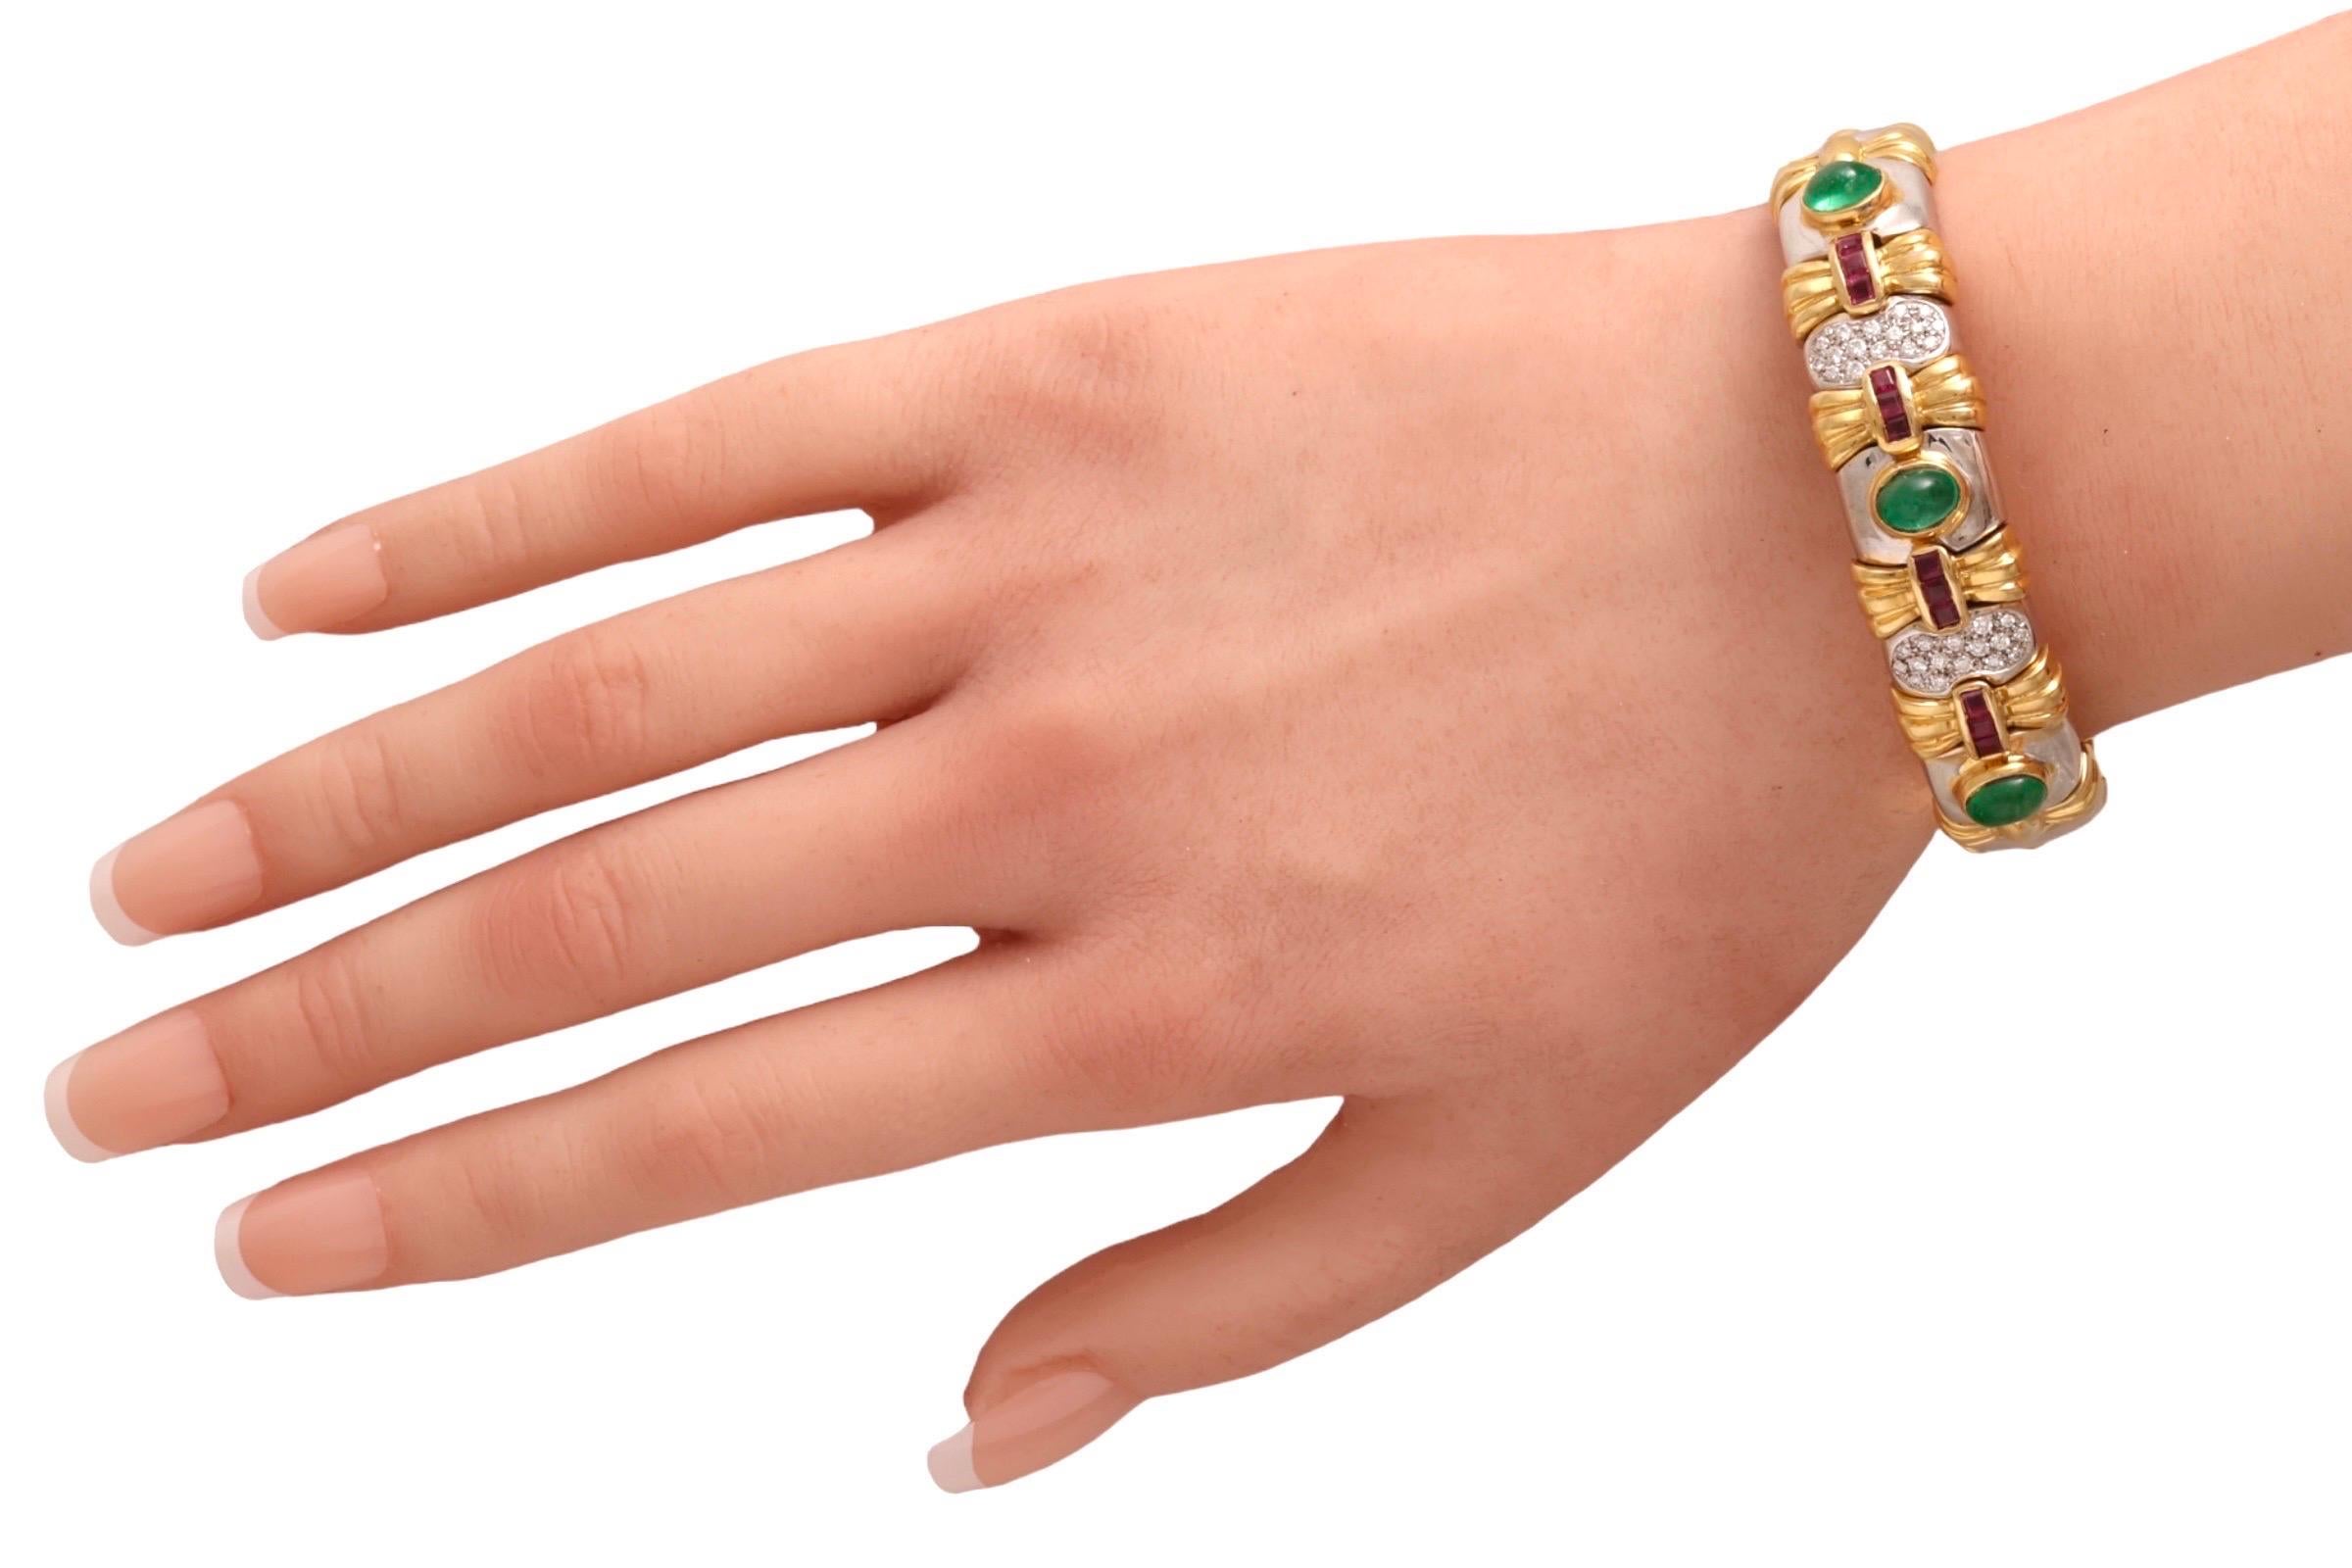 22kt yellow gold custom made stylish design fabulous flexible bracelet